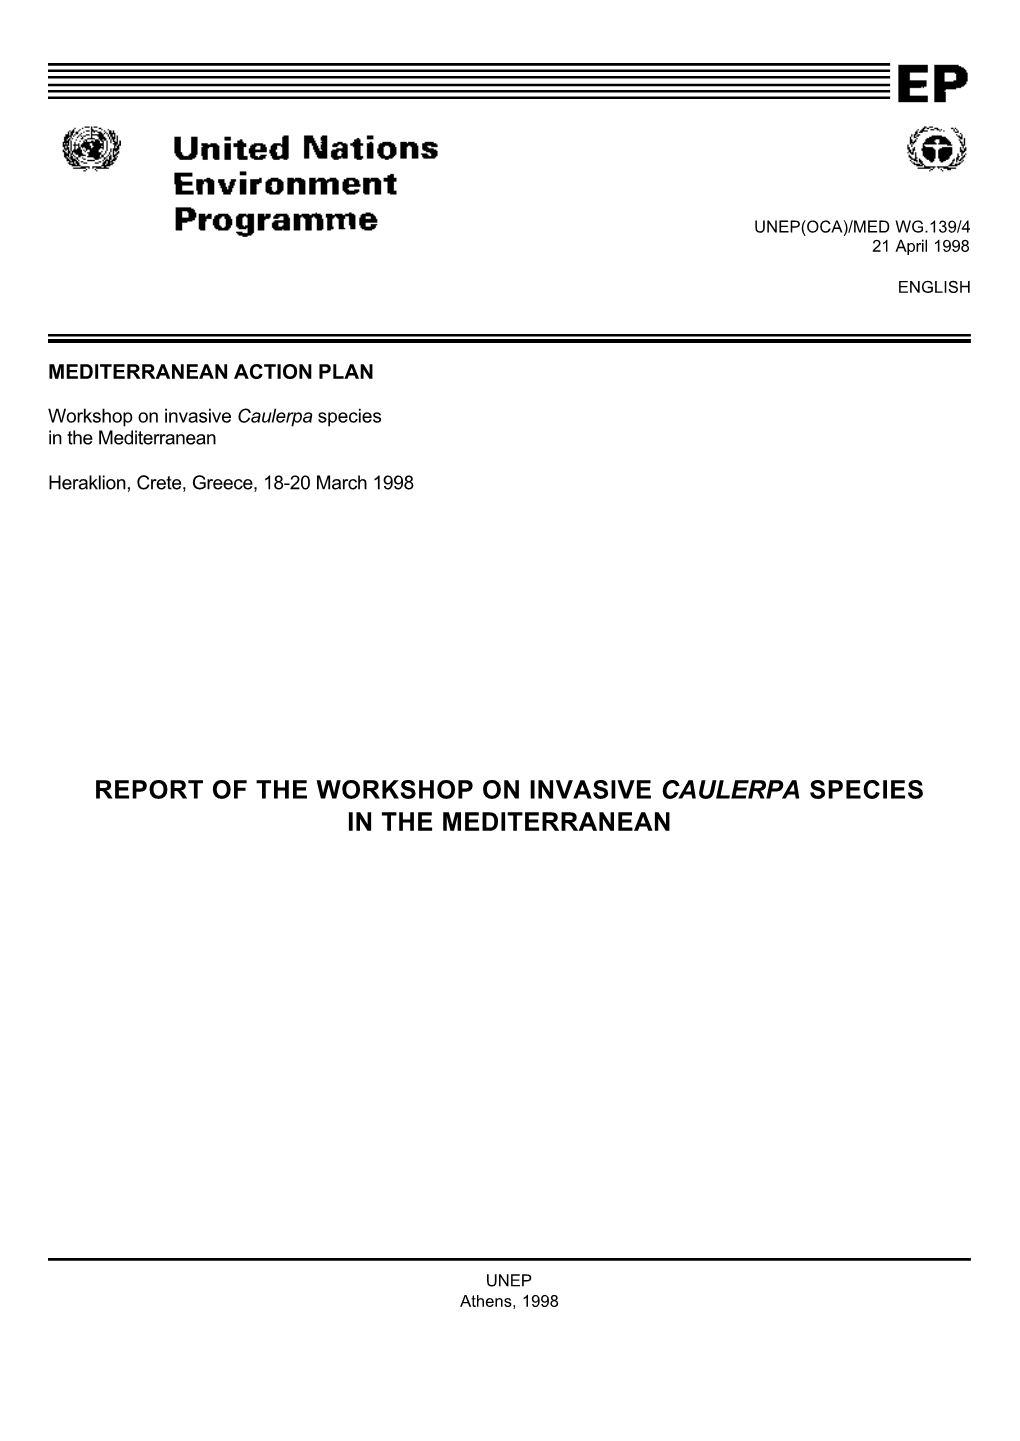 Report of the Workshop on Invasive Caulerpa Species in the Mediterranean